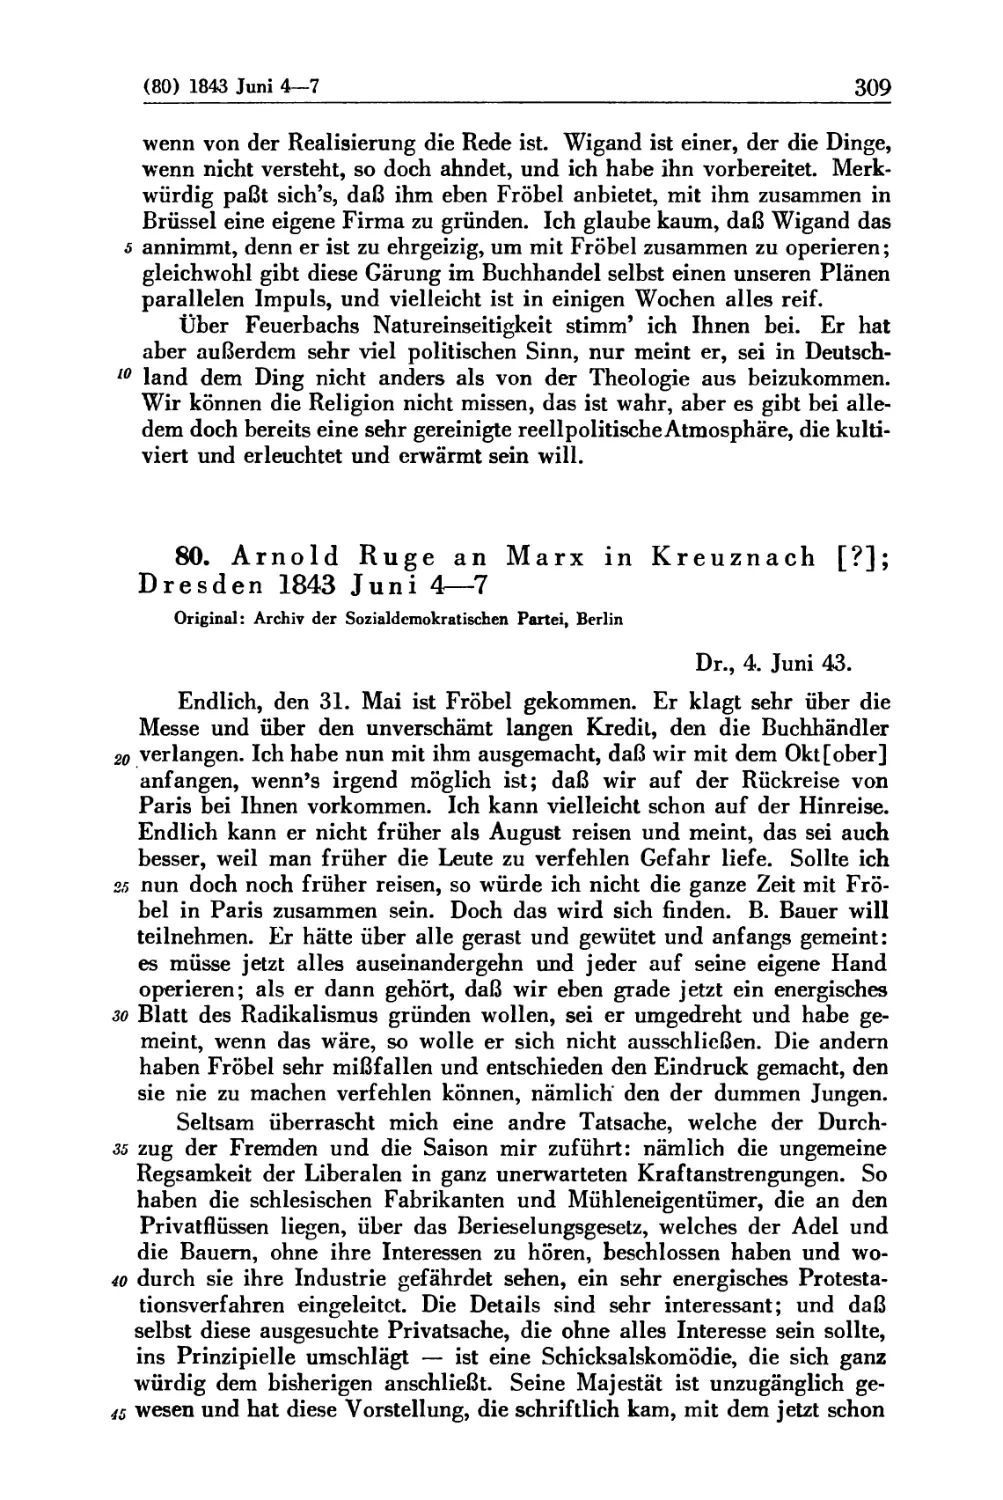 80. Arnold Ruge an Marx in Kreuznach [?]; Dresden 1843 Juni 4 — 7